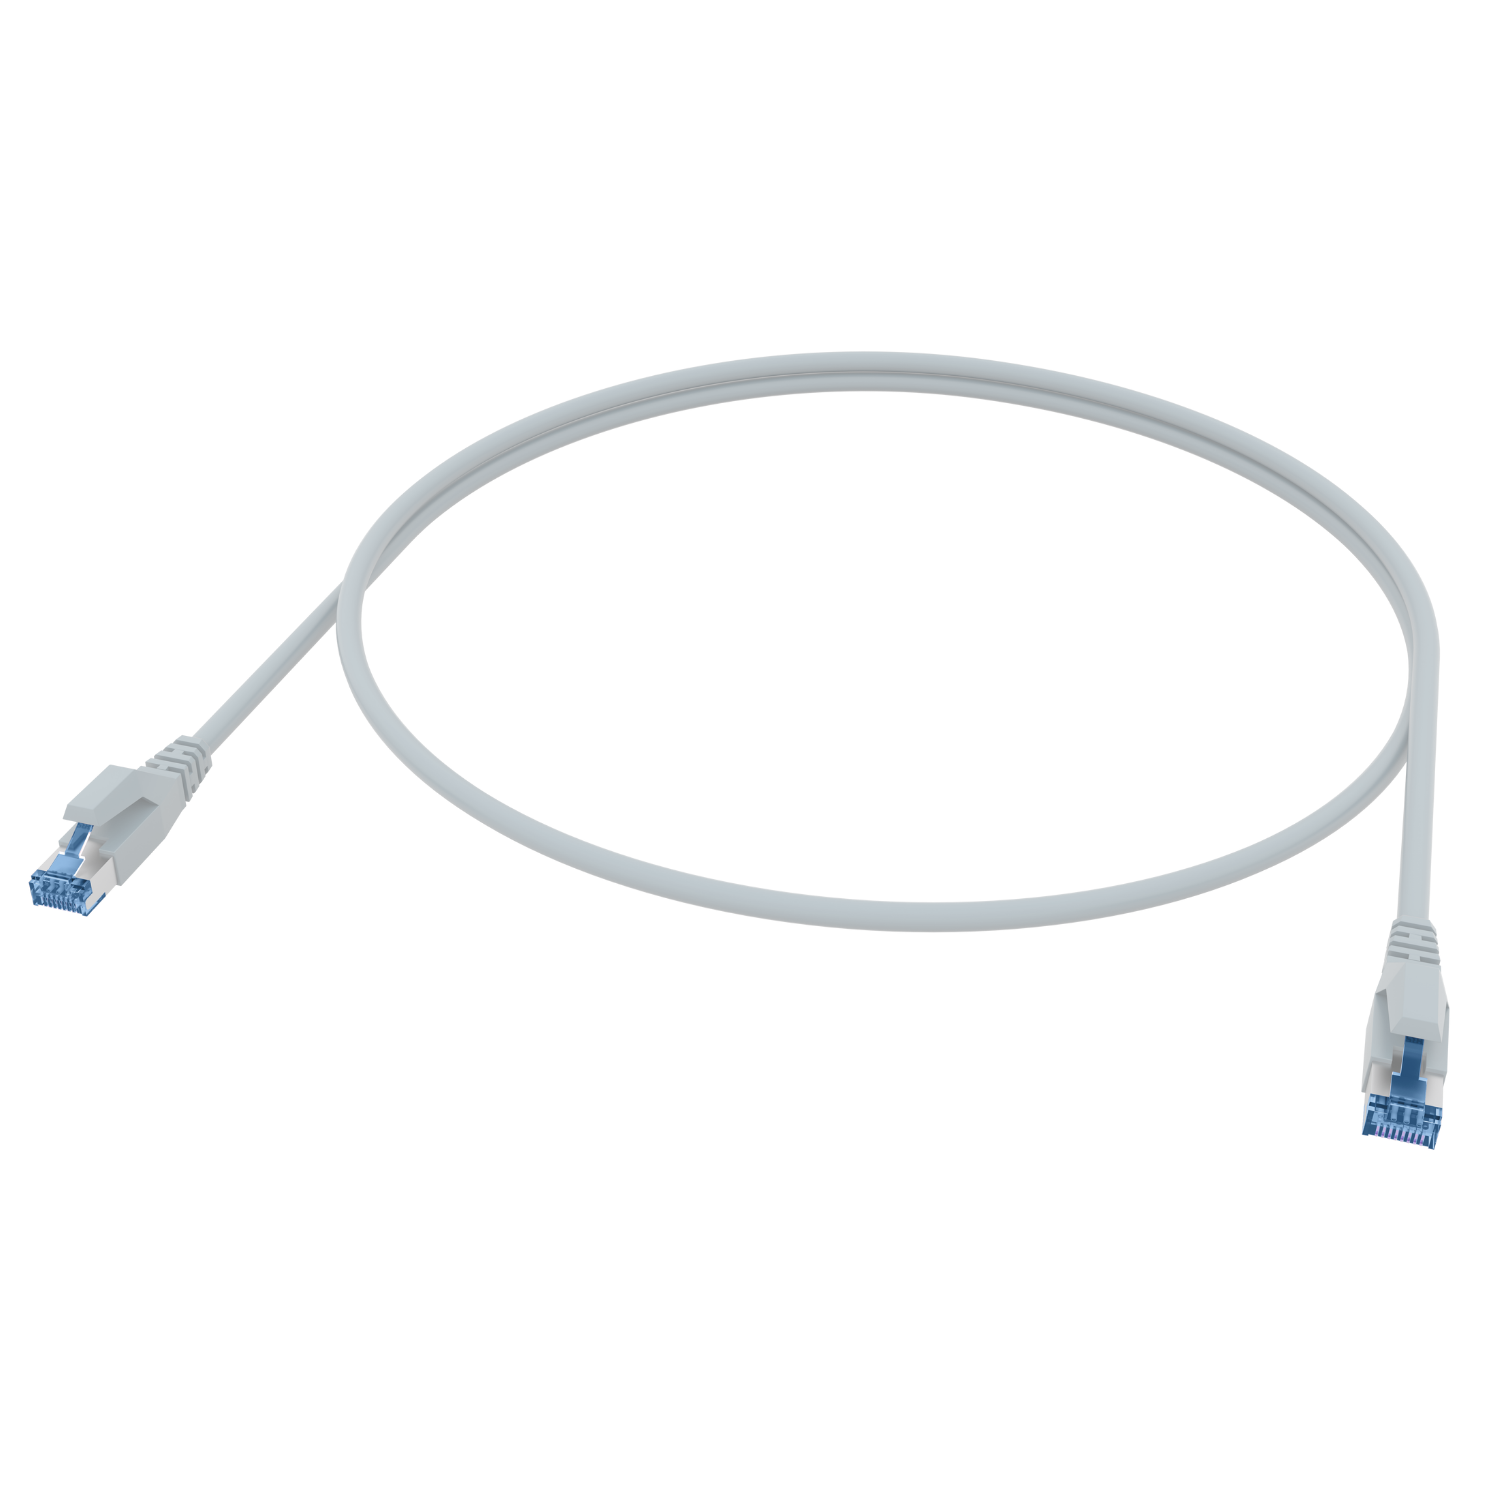 Ethernetkabel m 20,0 AIXONTEC 20m RJ45 10 Netzwerkkabel, Universal Gigabit, Lankabel